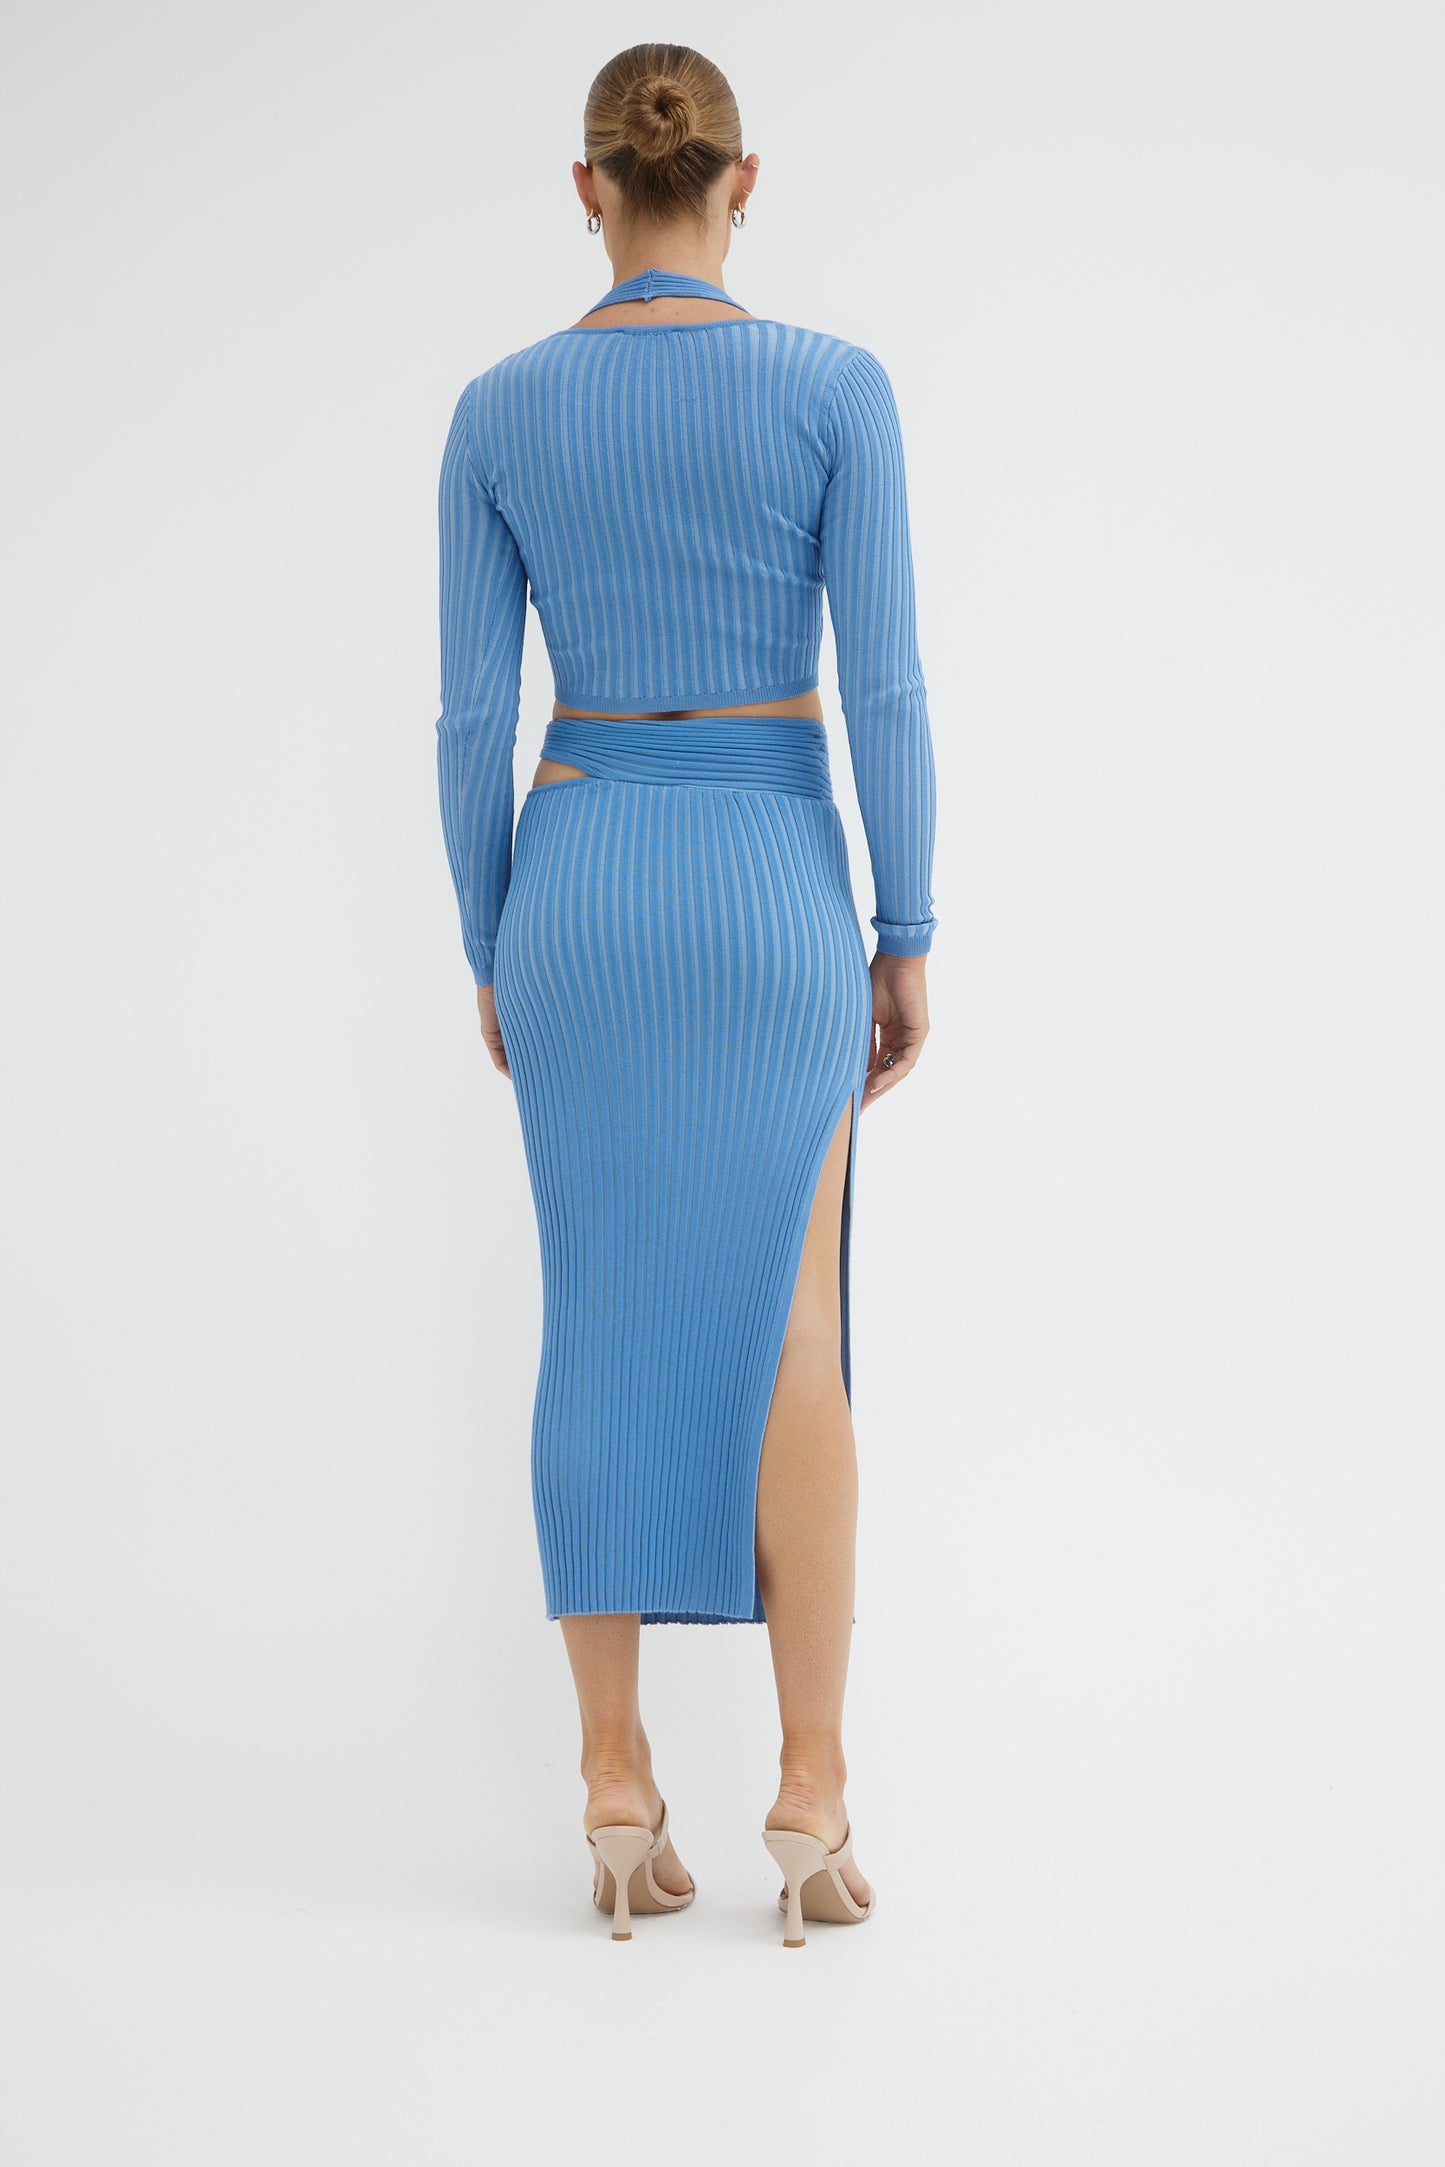 
                  
                    Sovere Studio women's Clothing Sydney Intwine knit Skirt Blue
                  
                